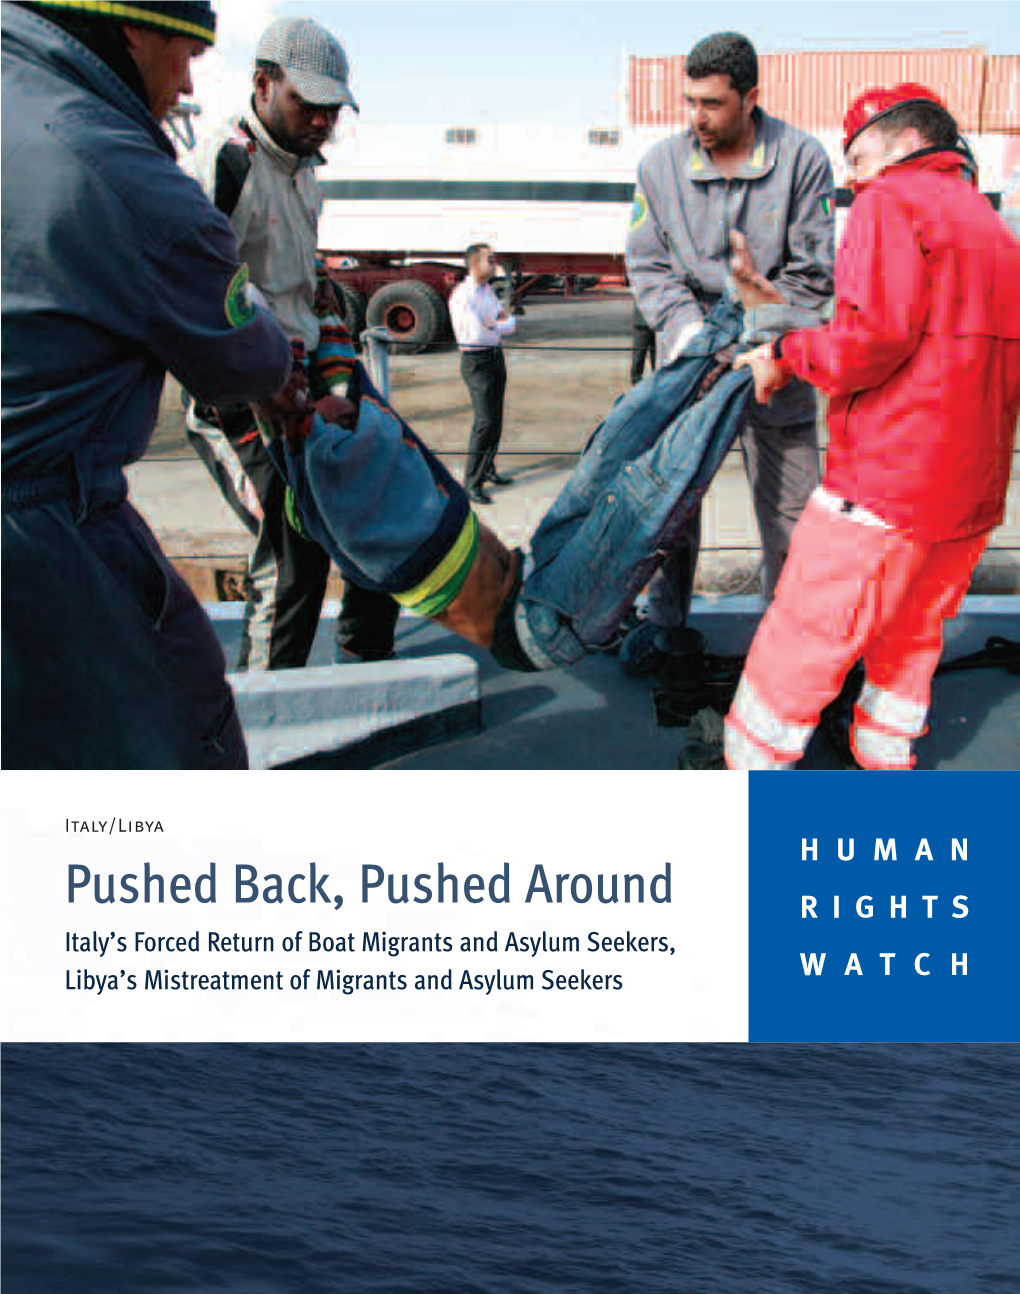 Migrants and Asylum Seekers, Libya’S Mistreatment of Migrants and Asylum Seekers WATCH